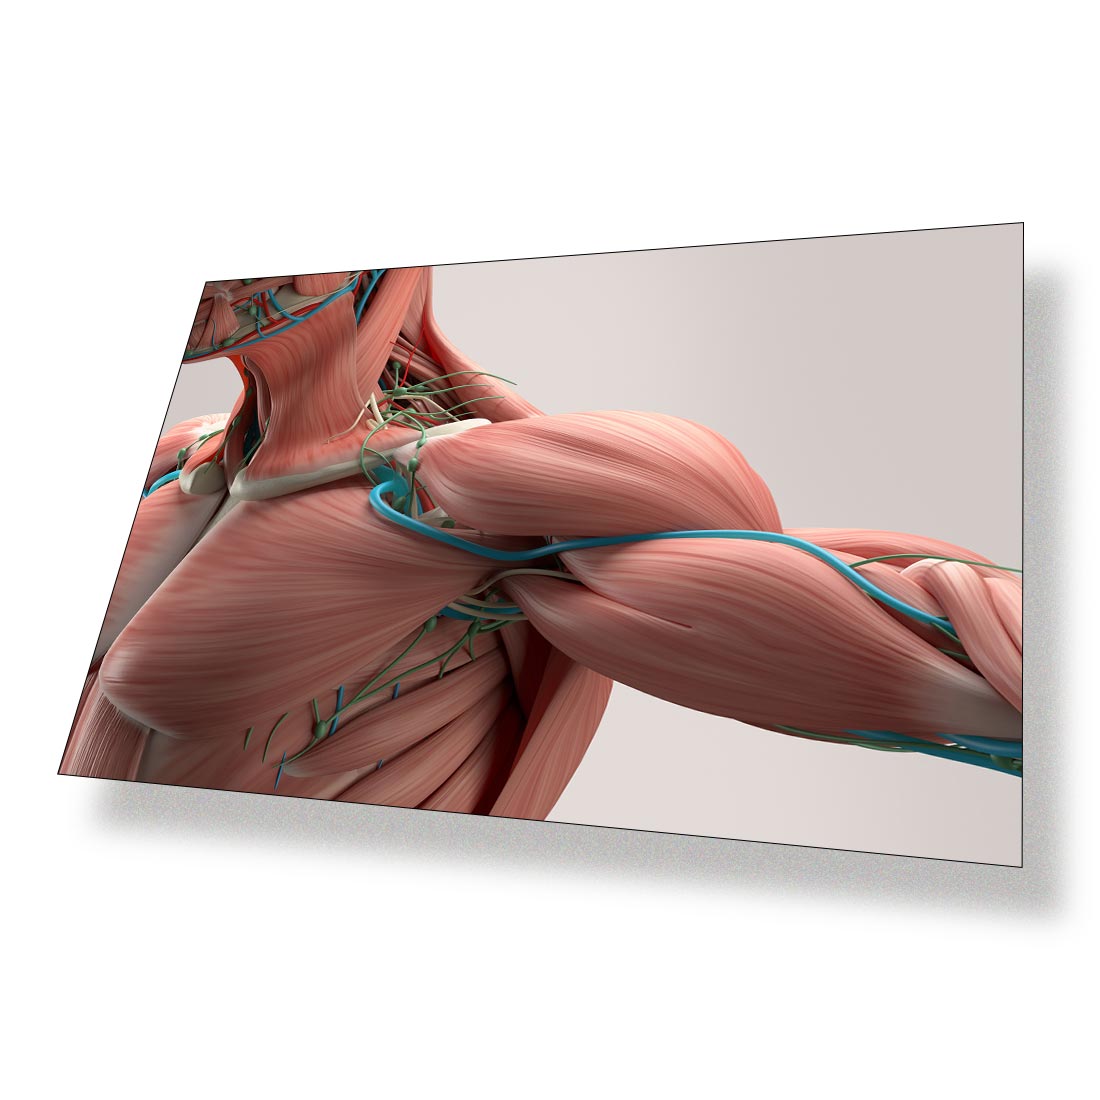 Art Print Poster Human Anatomy Shoulder Muscle Biology #52977 | eBay